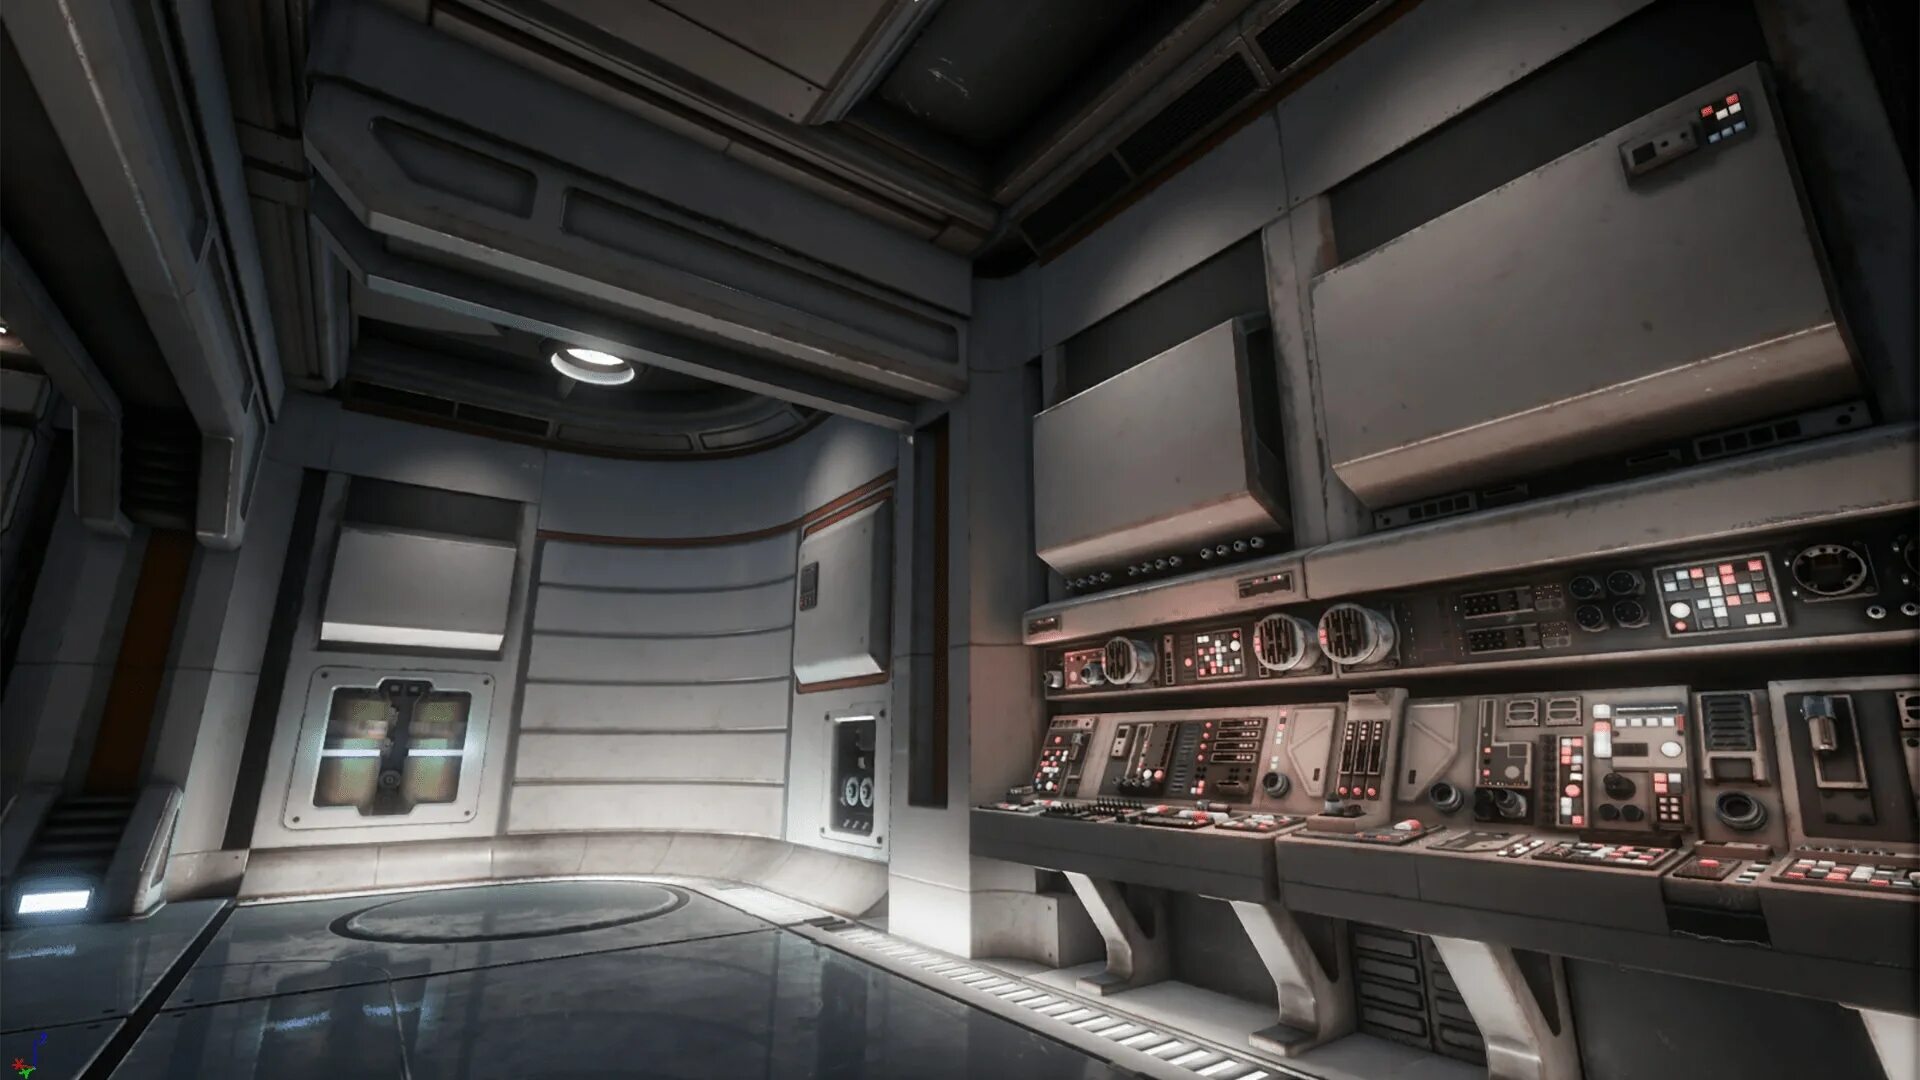 Тв sci fi на сегодня. Лобби концепт Sci Fi. SC-Fi. Фантастический дизайн холодильников. АССЕТ кофеварка Sci-Fi.